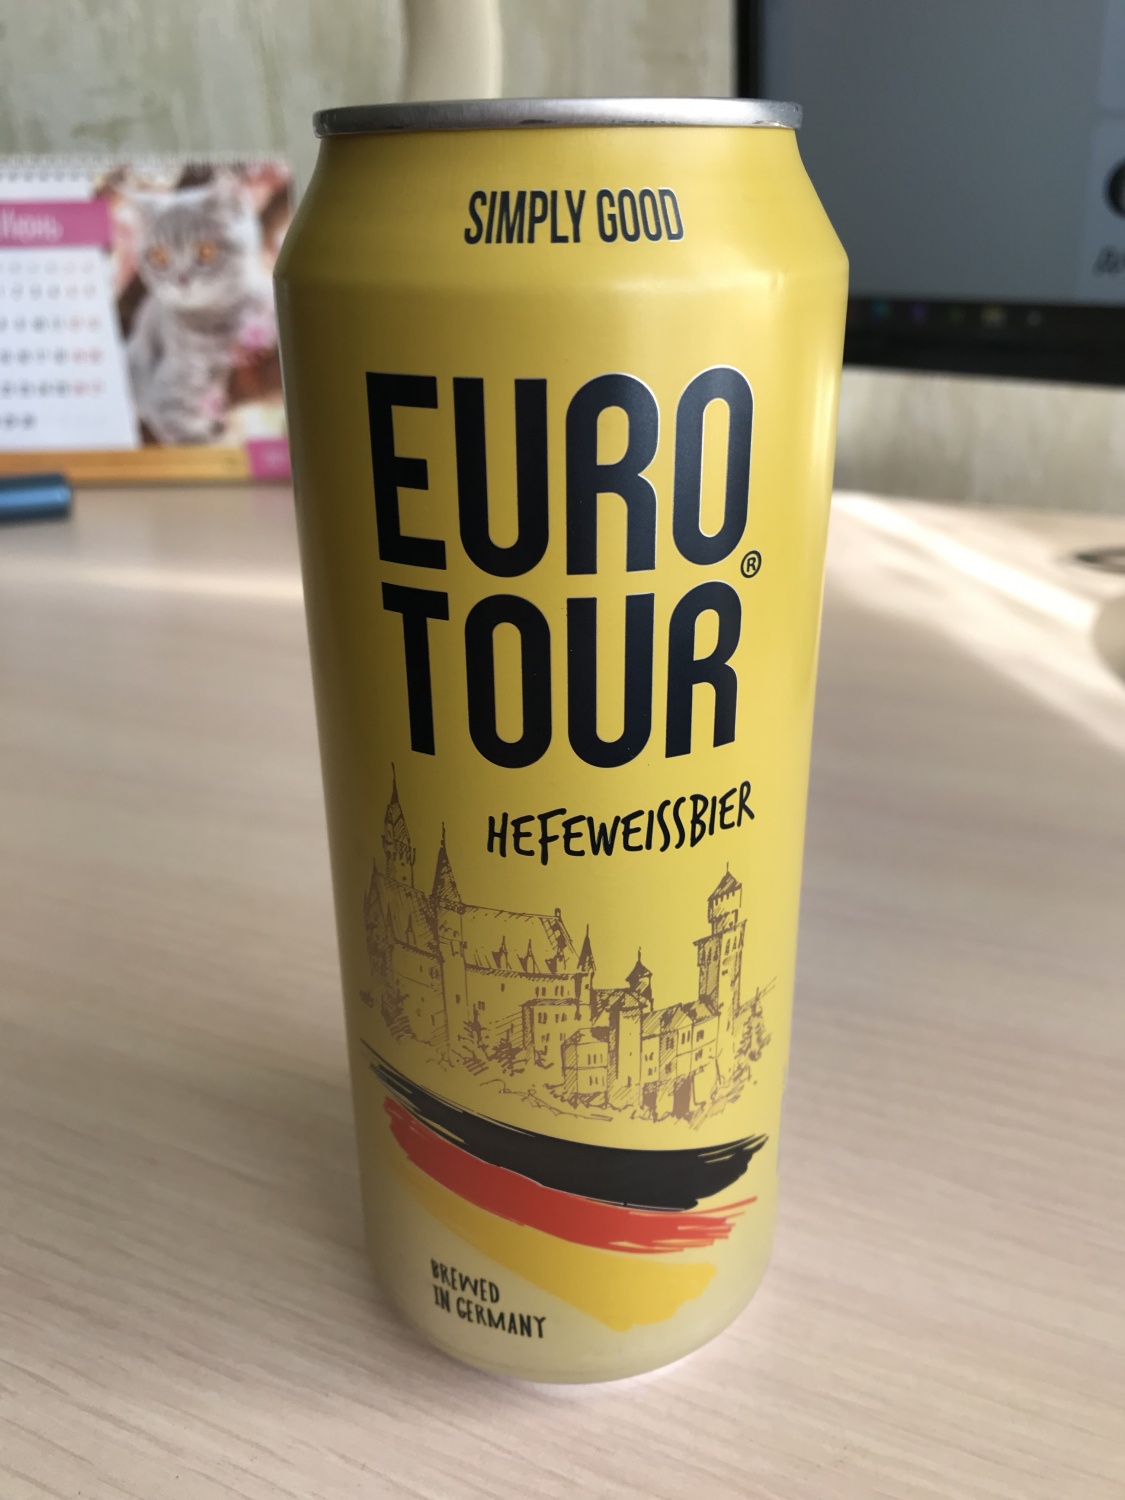 Пиво евротур германия фото